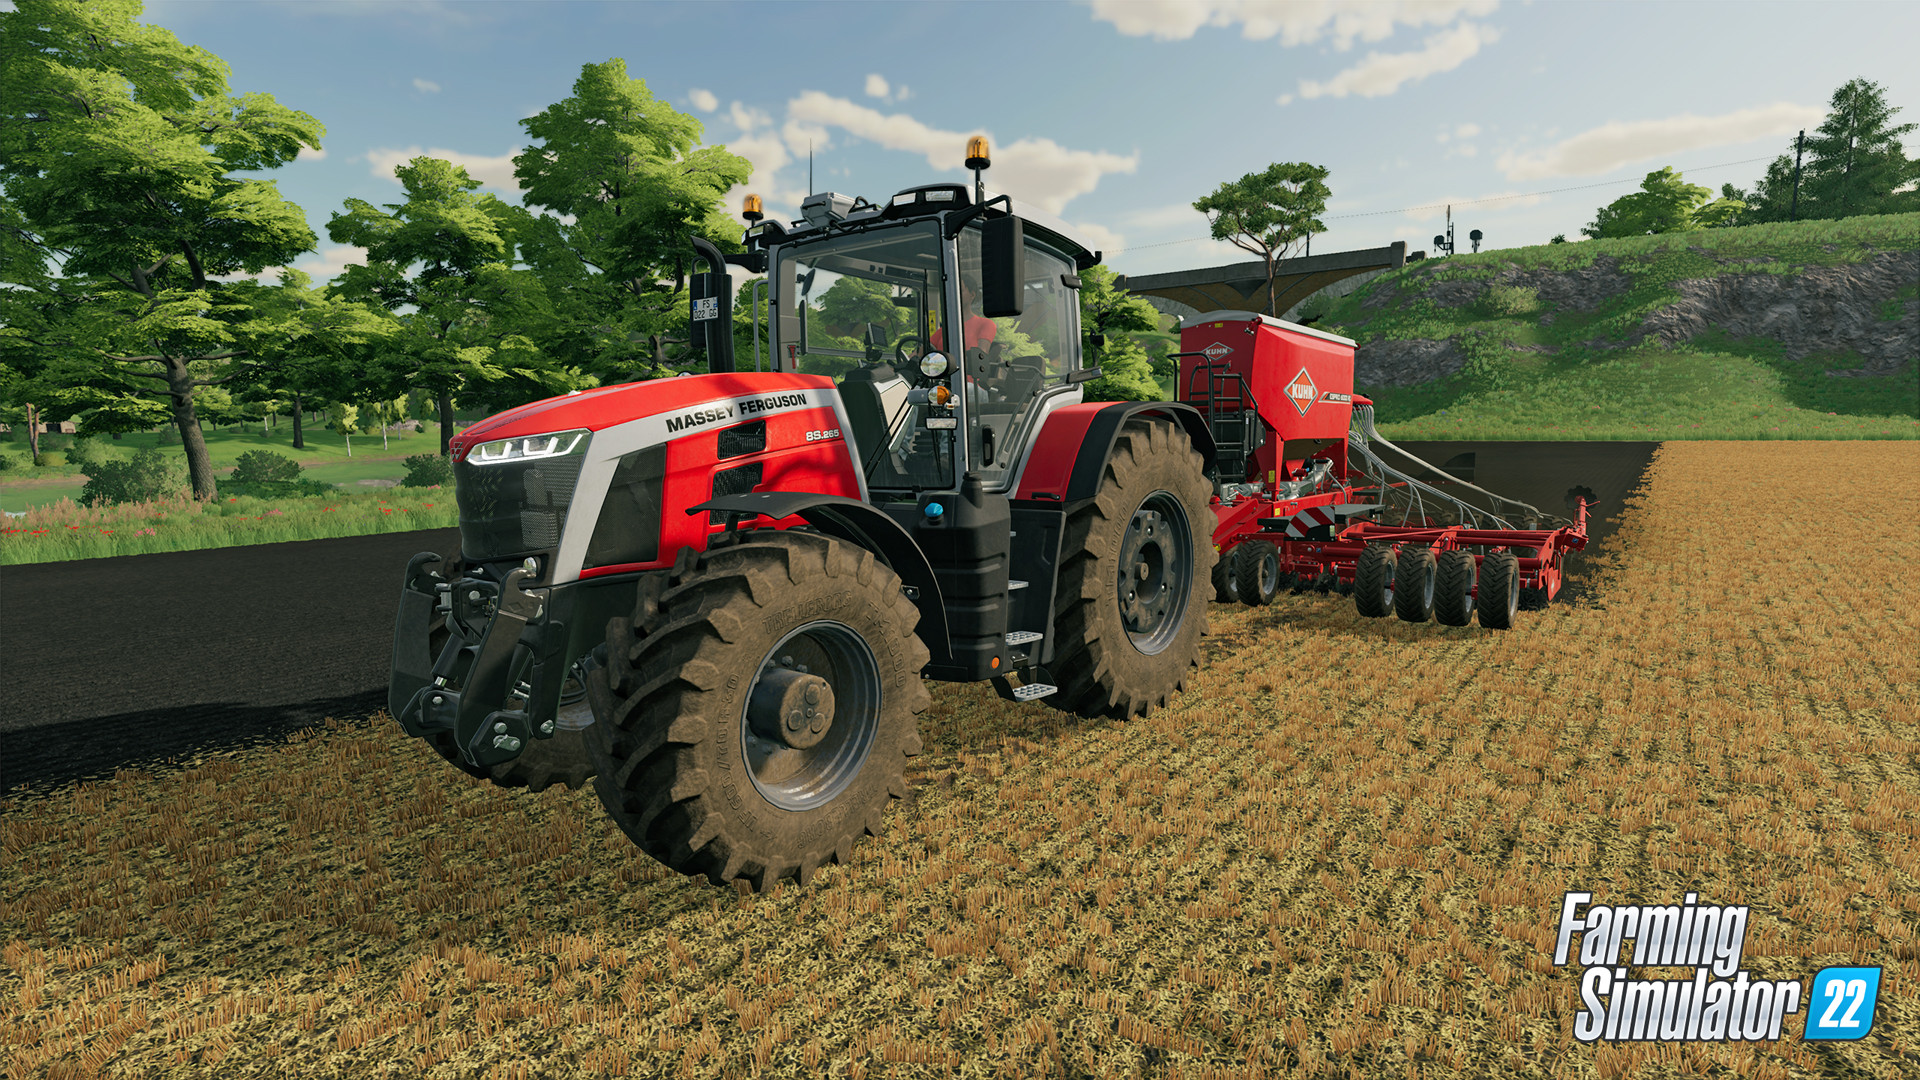 Quand sort Farming Simulator 2022 ?